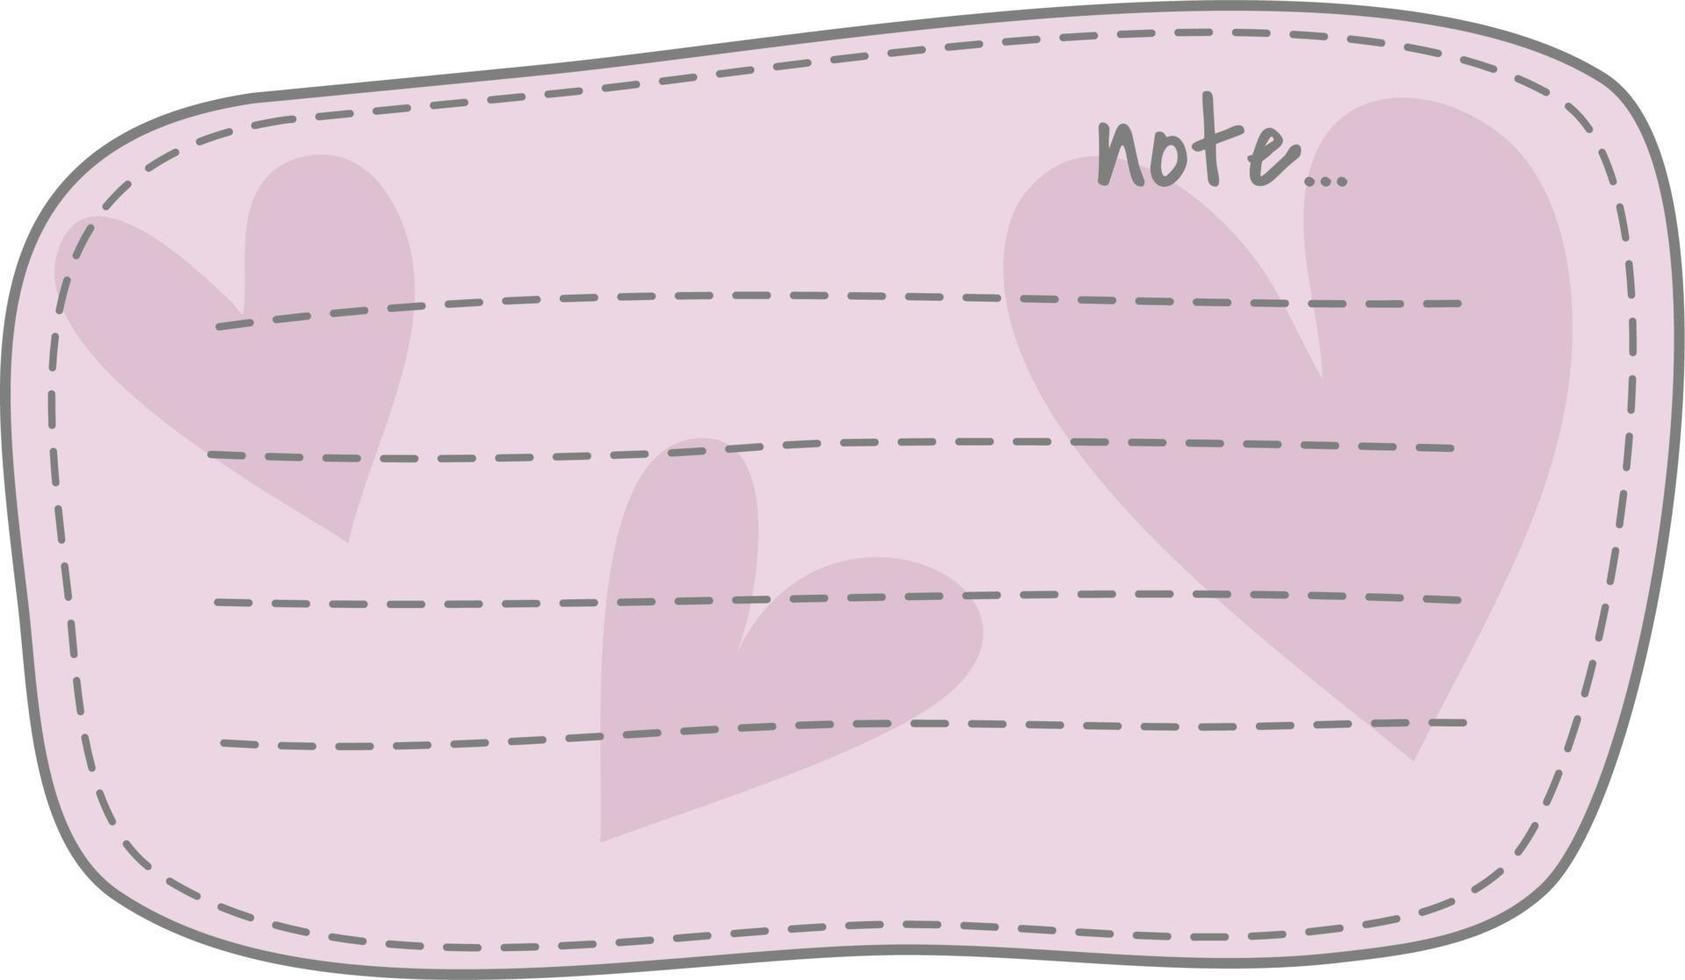 Cute note card vector